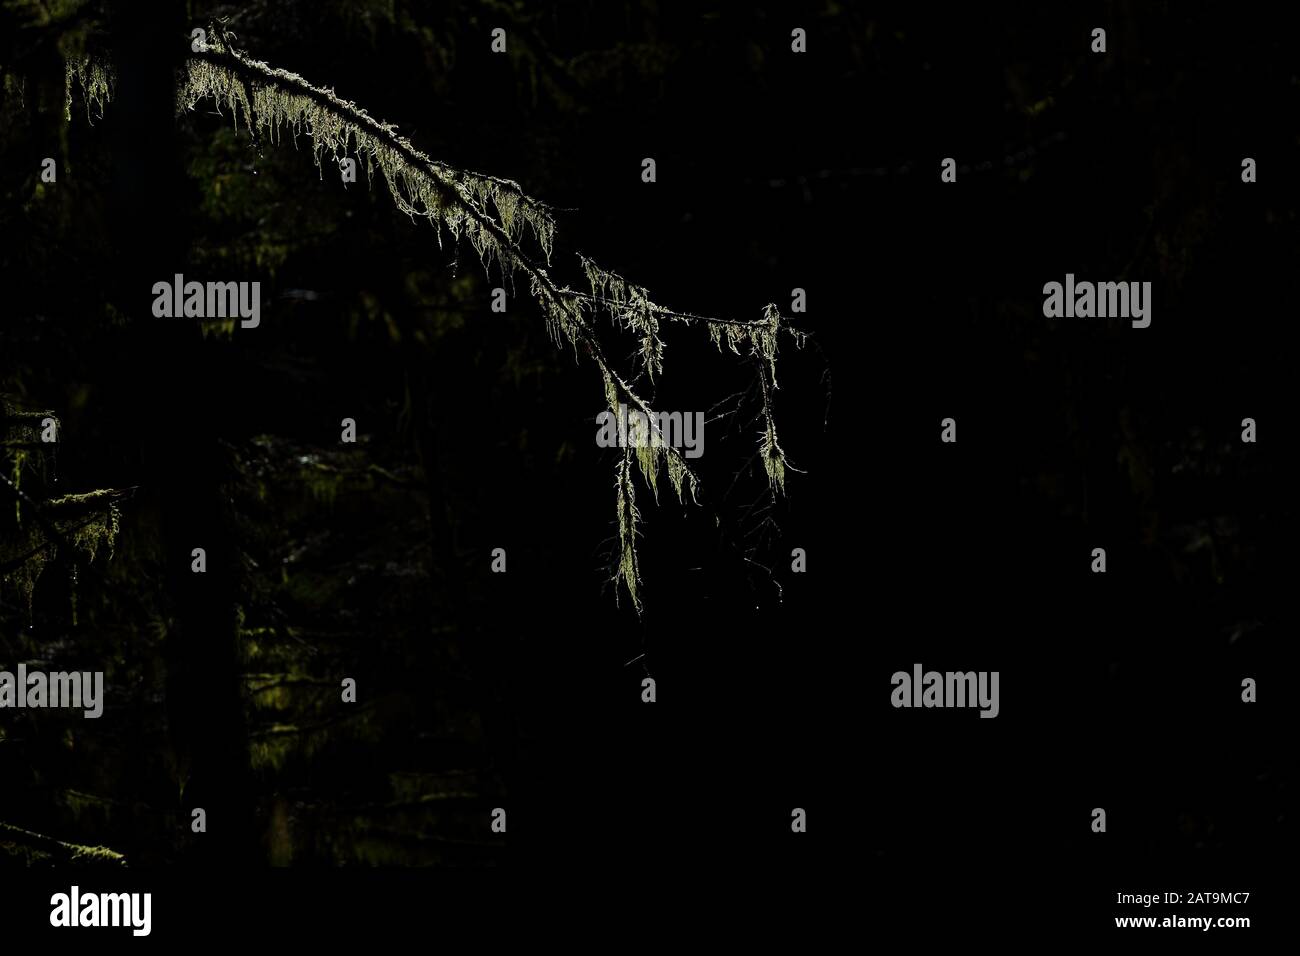 Moss en una rama de árbol en un bosque oscuro con retroiluminación Foto de stock